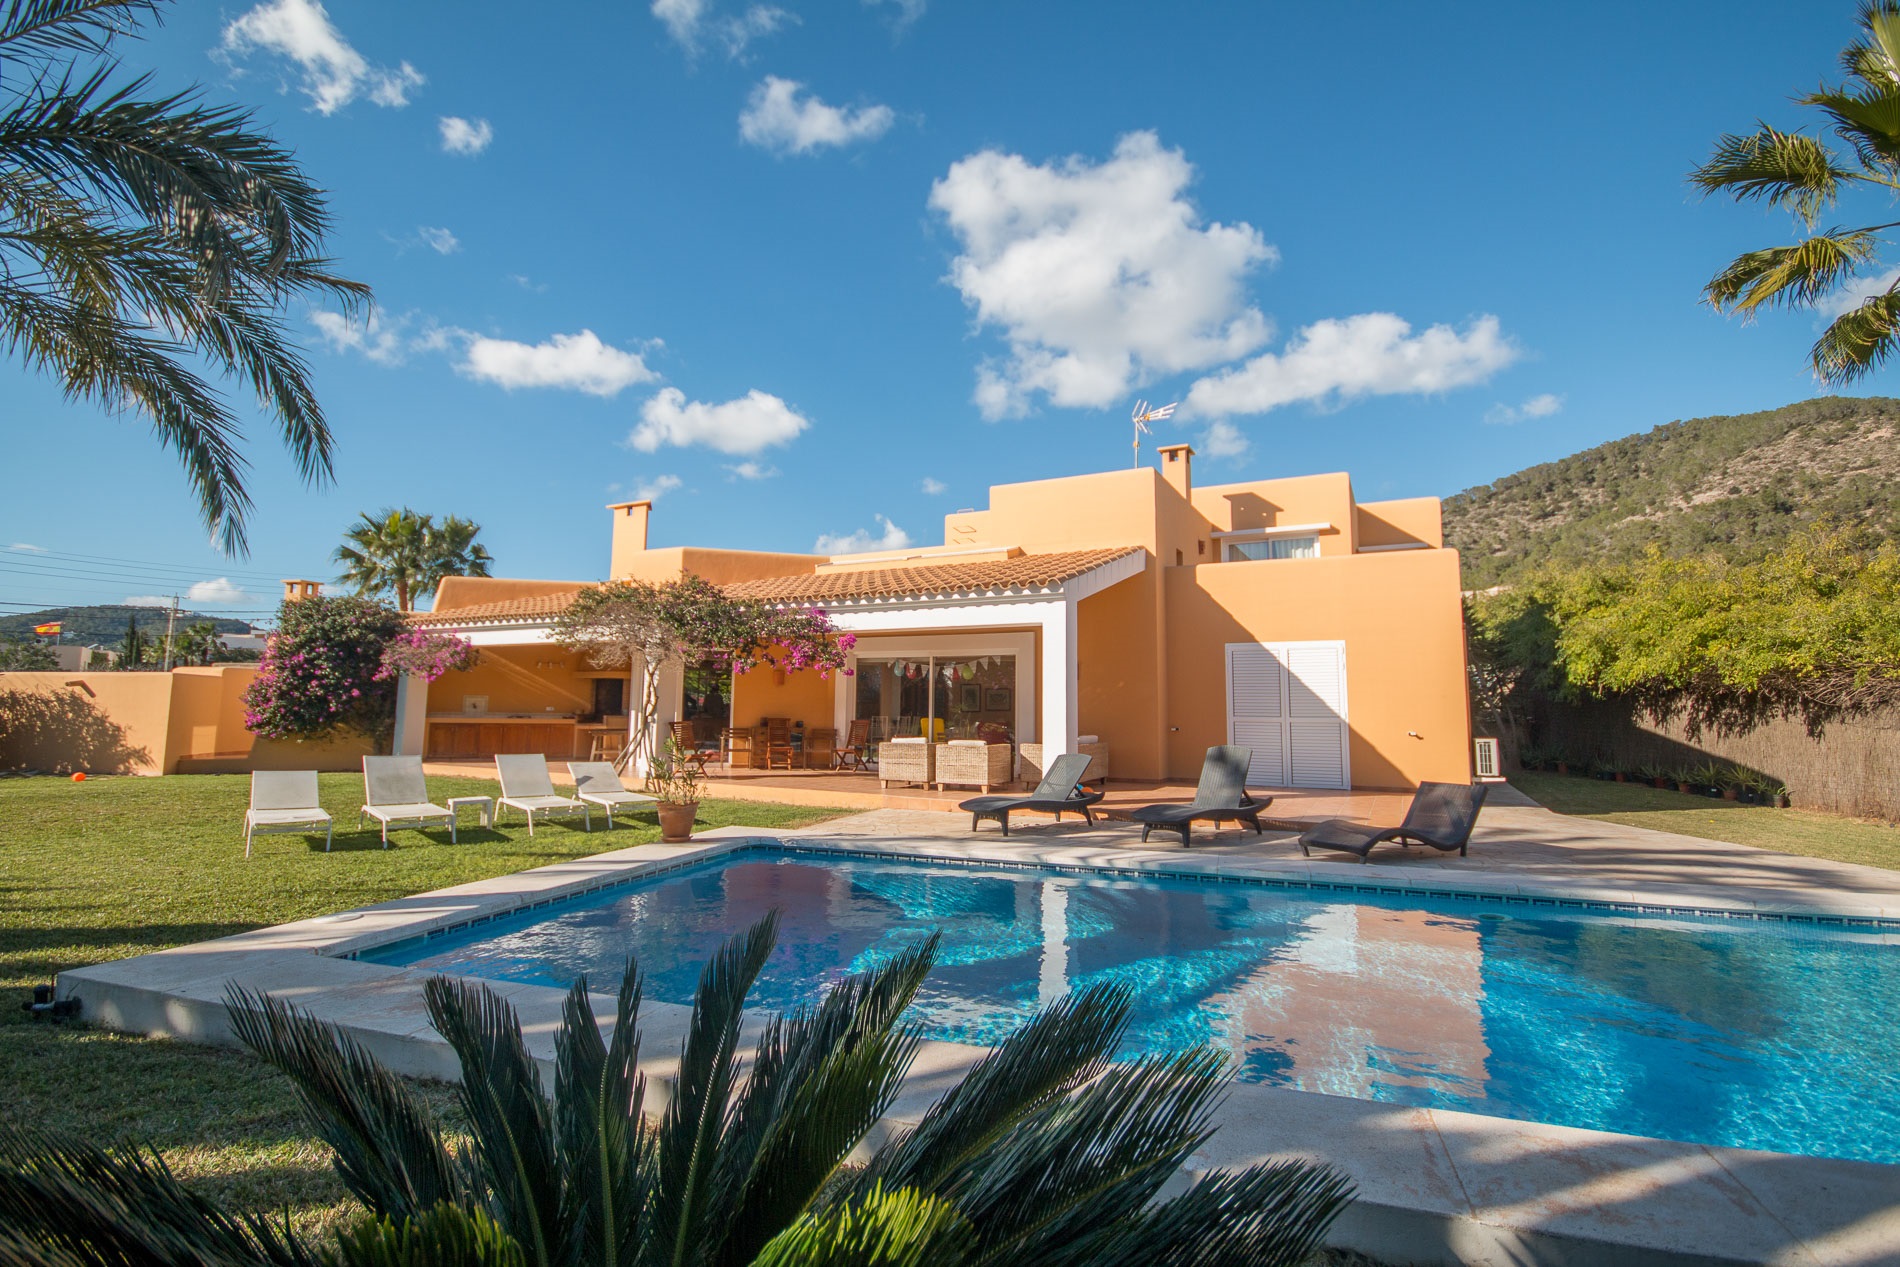 Charmante villa in de populaire wijk van Ibiza